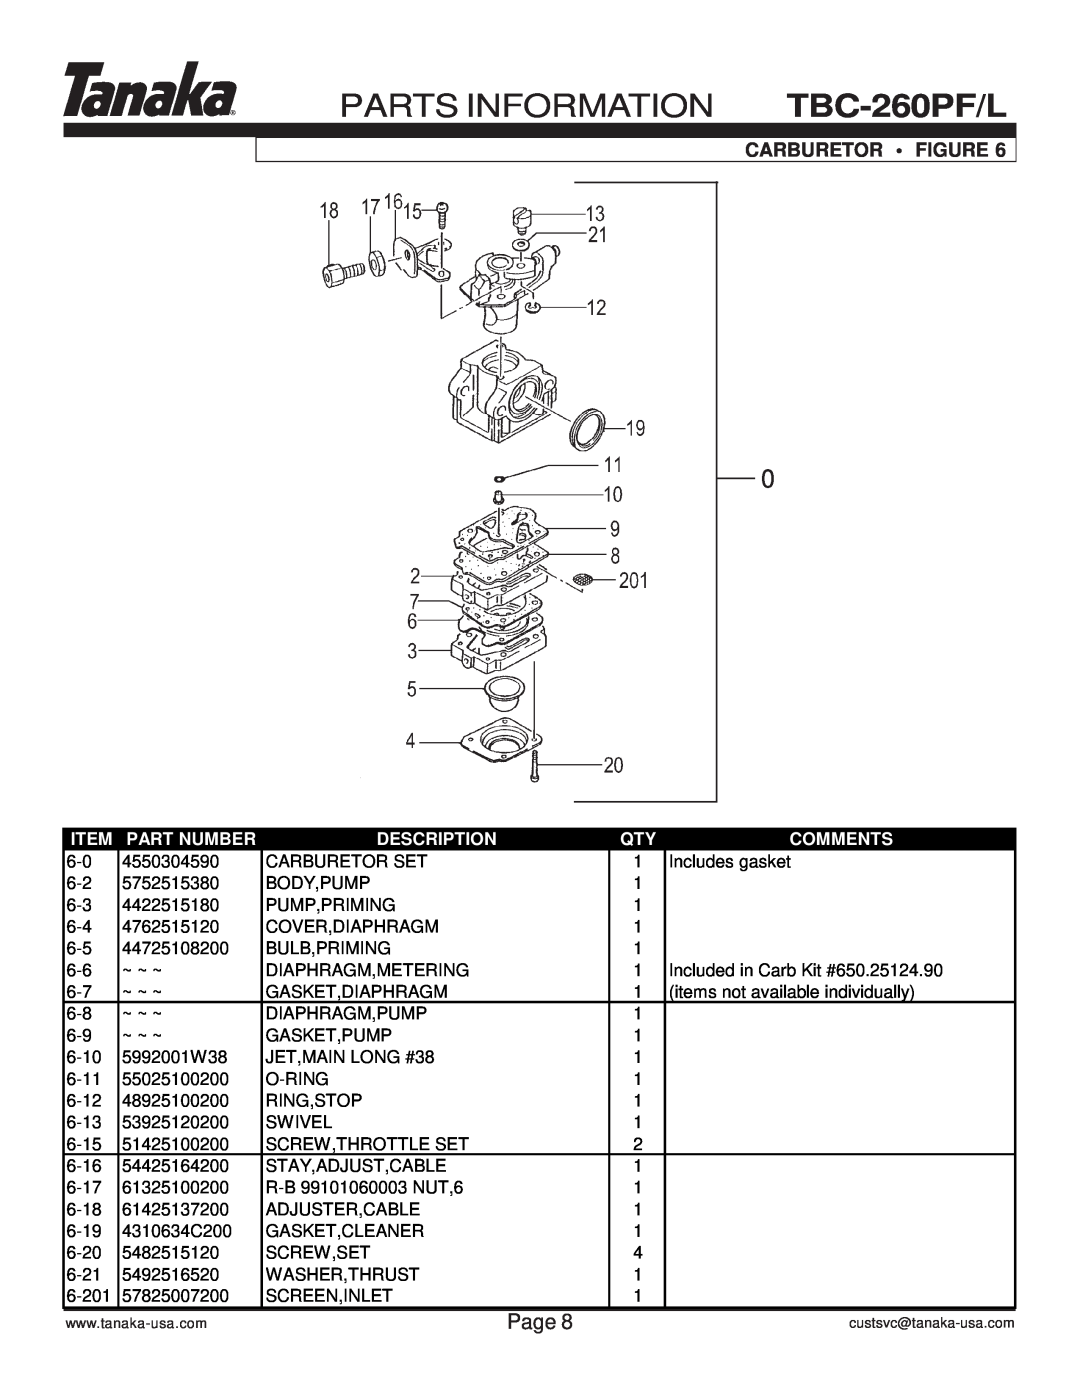 Tanaka TBC-260PF/L manual Carburetor Figure, Parts Information, Page, Part Number, Description, Comments 